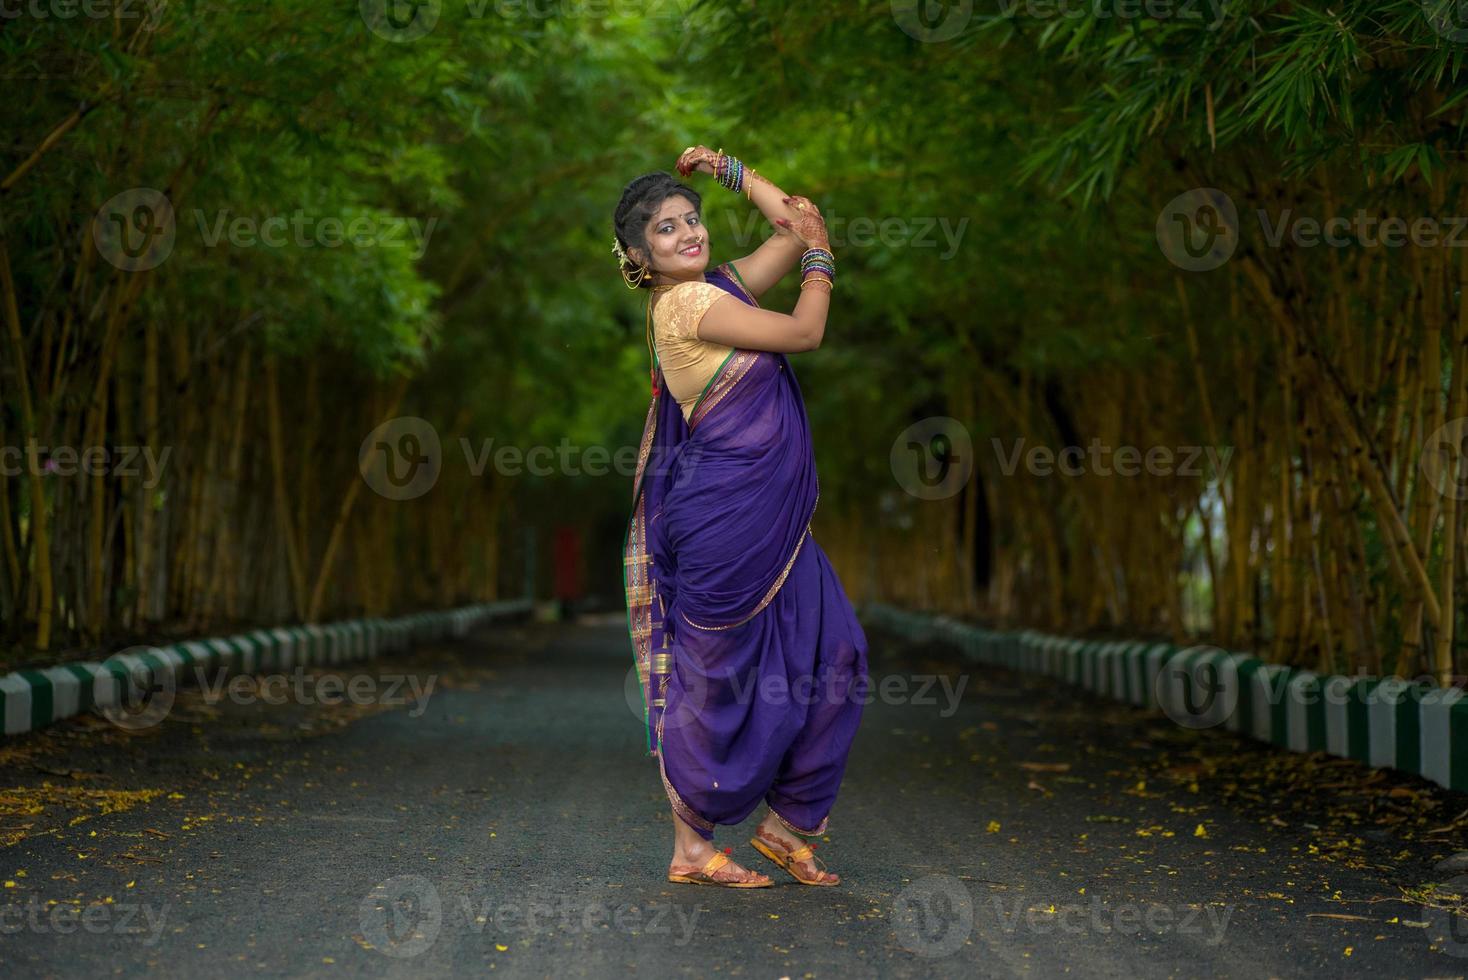 India hermosa joven tradicional en sari posando al aire libre foto